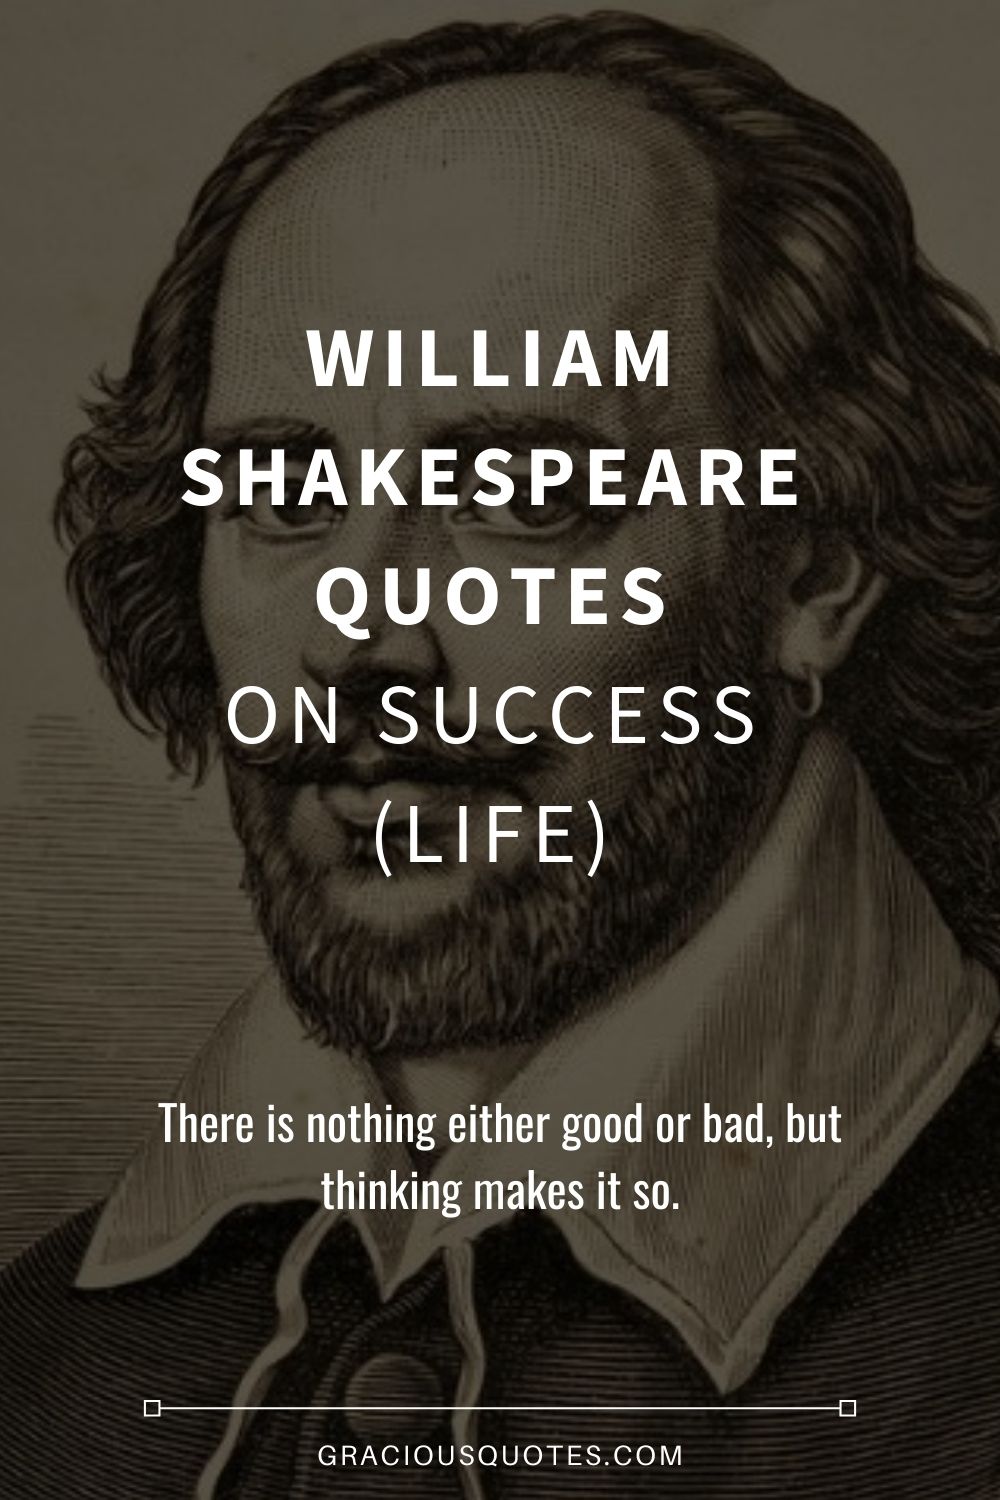 William Shakespeare Quotes on Success (LIFE) - Gracious Quotes